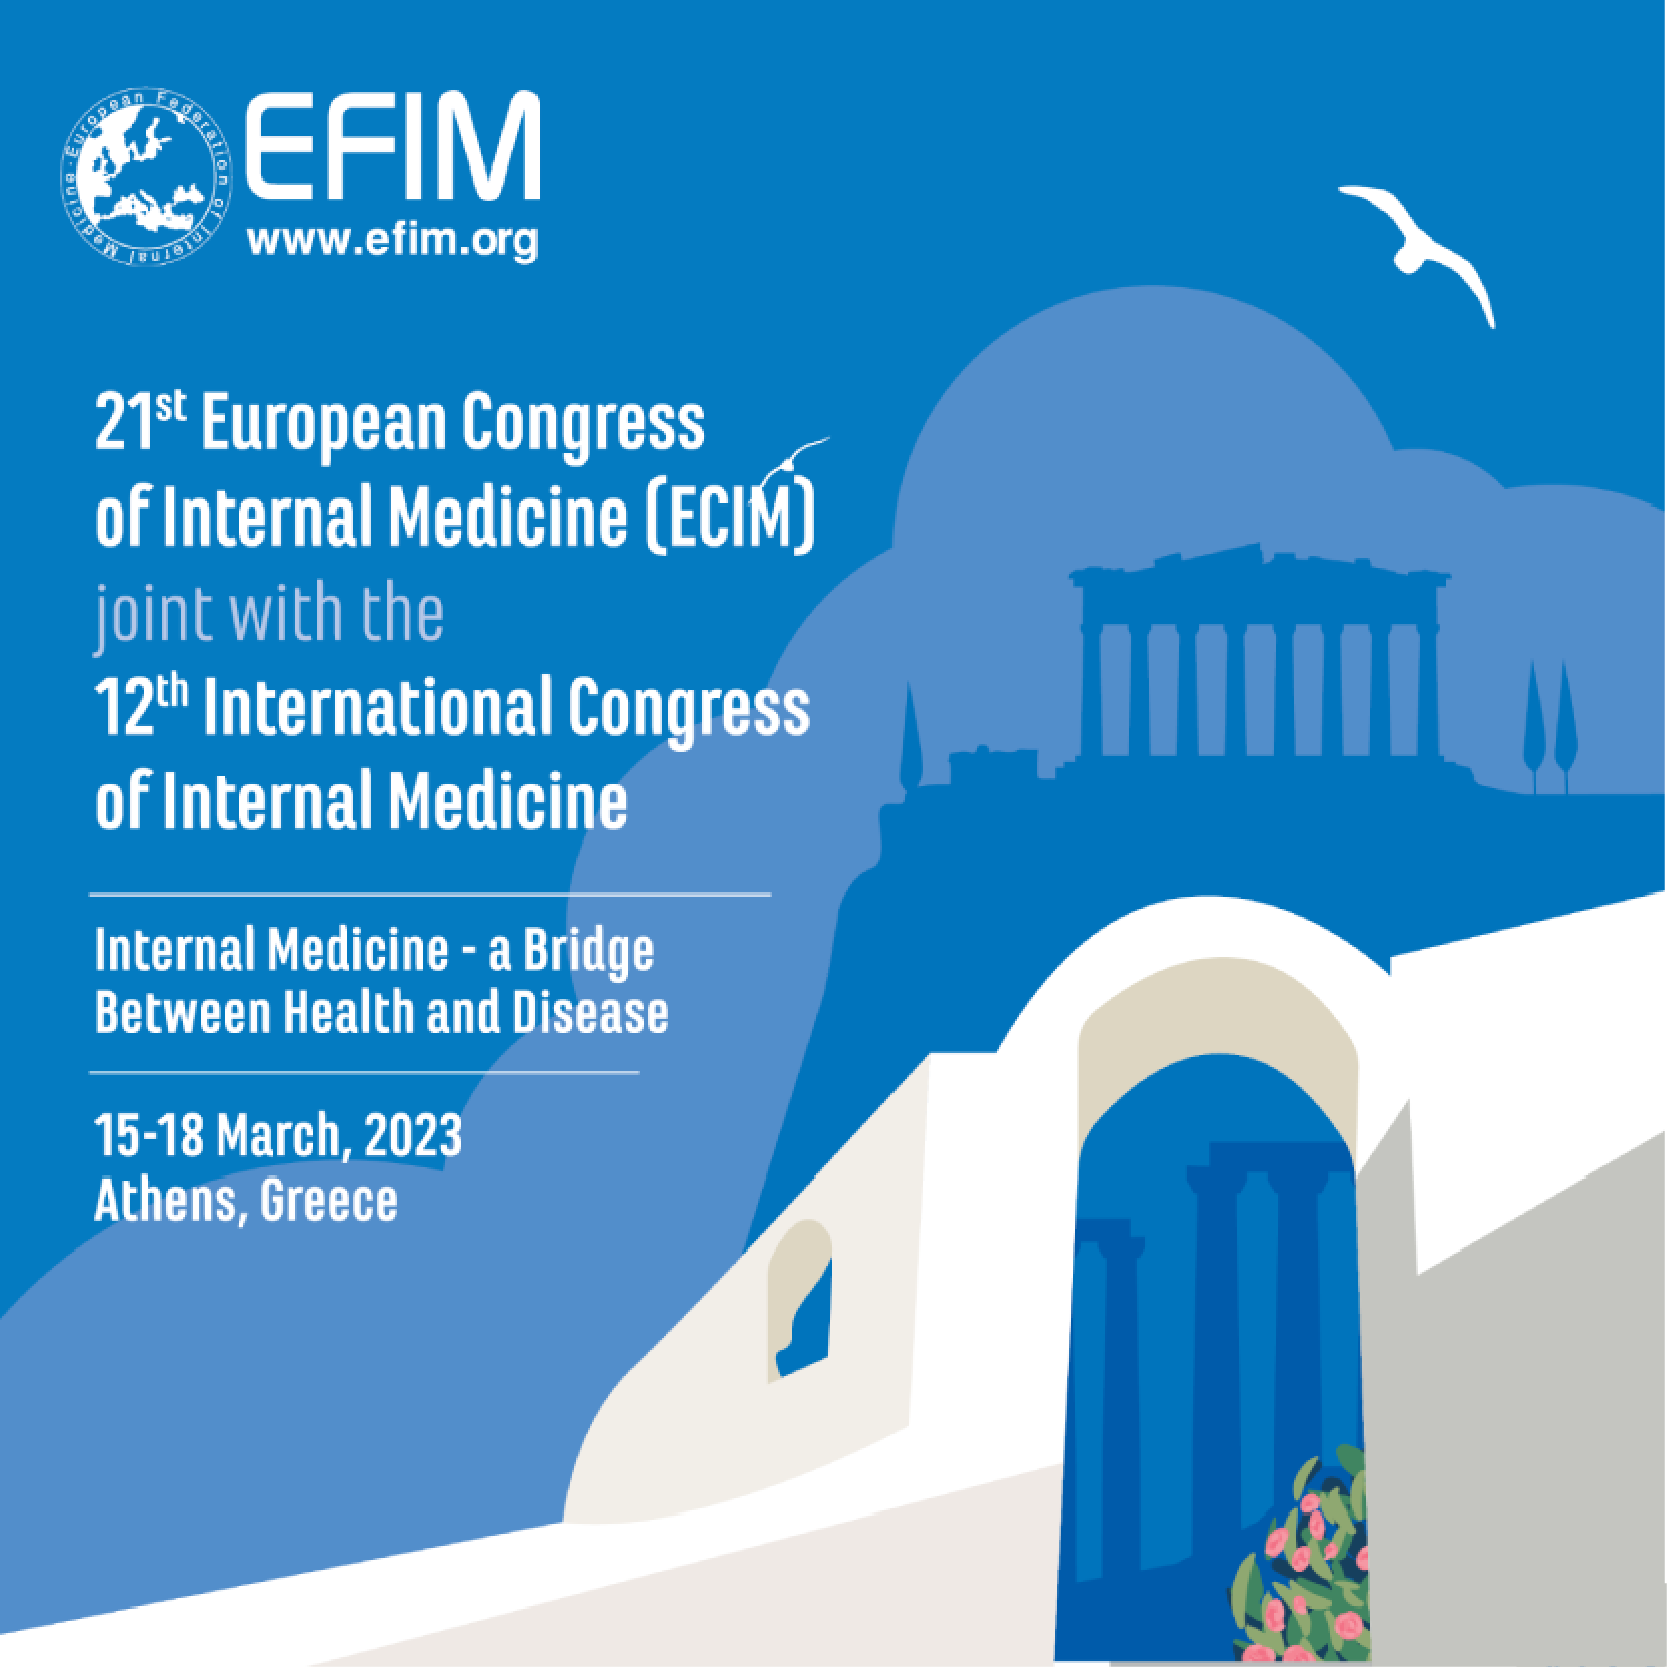 21st European Congress of Internal Medicine - ECIM 2023